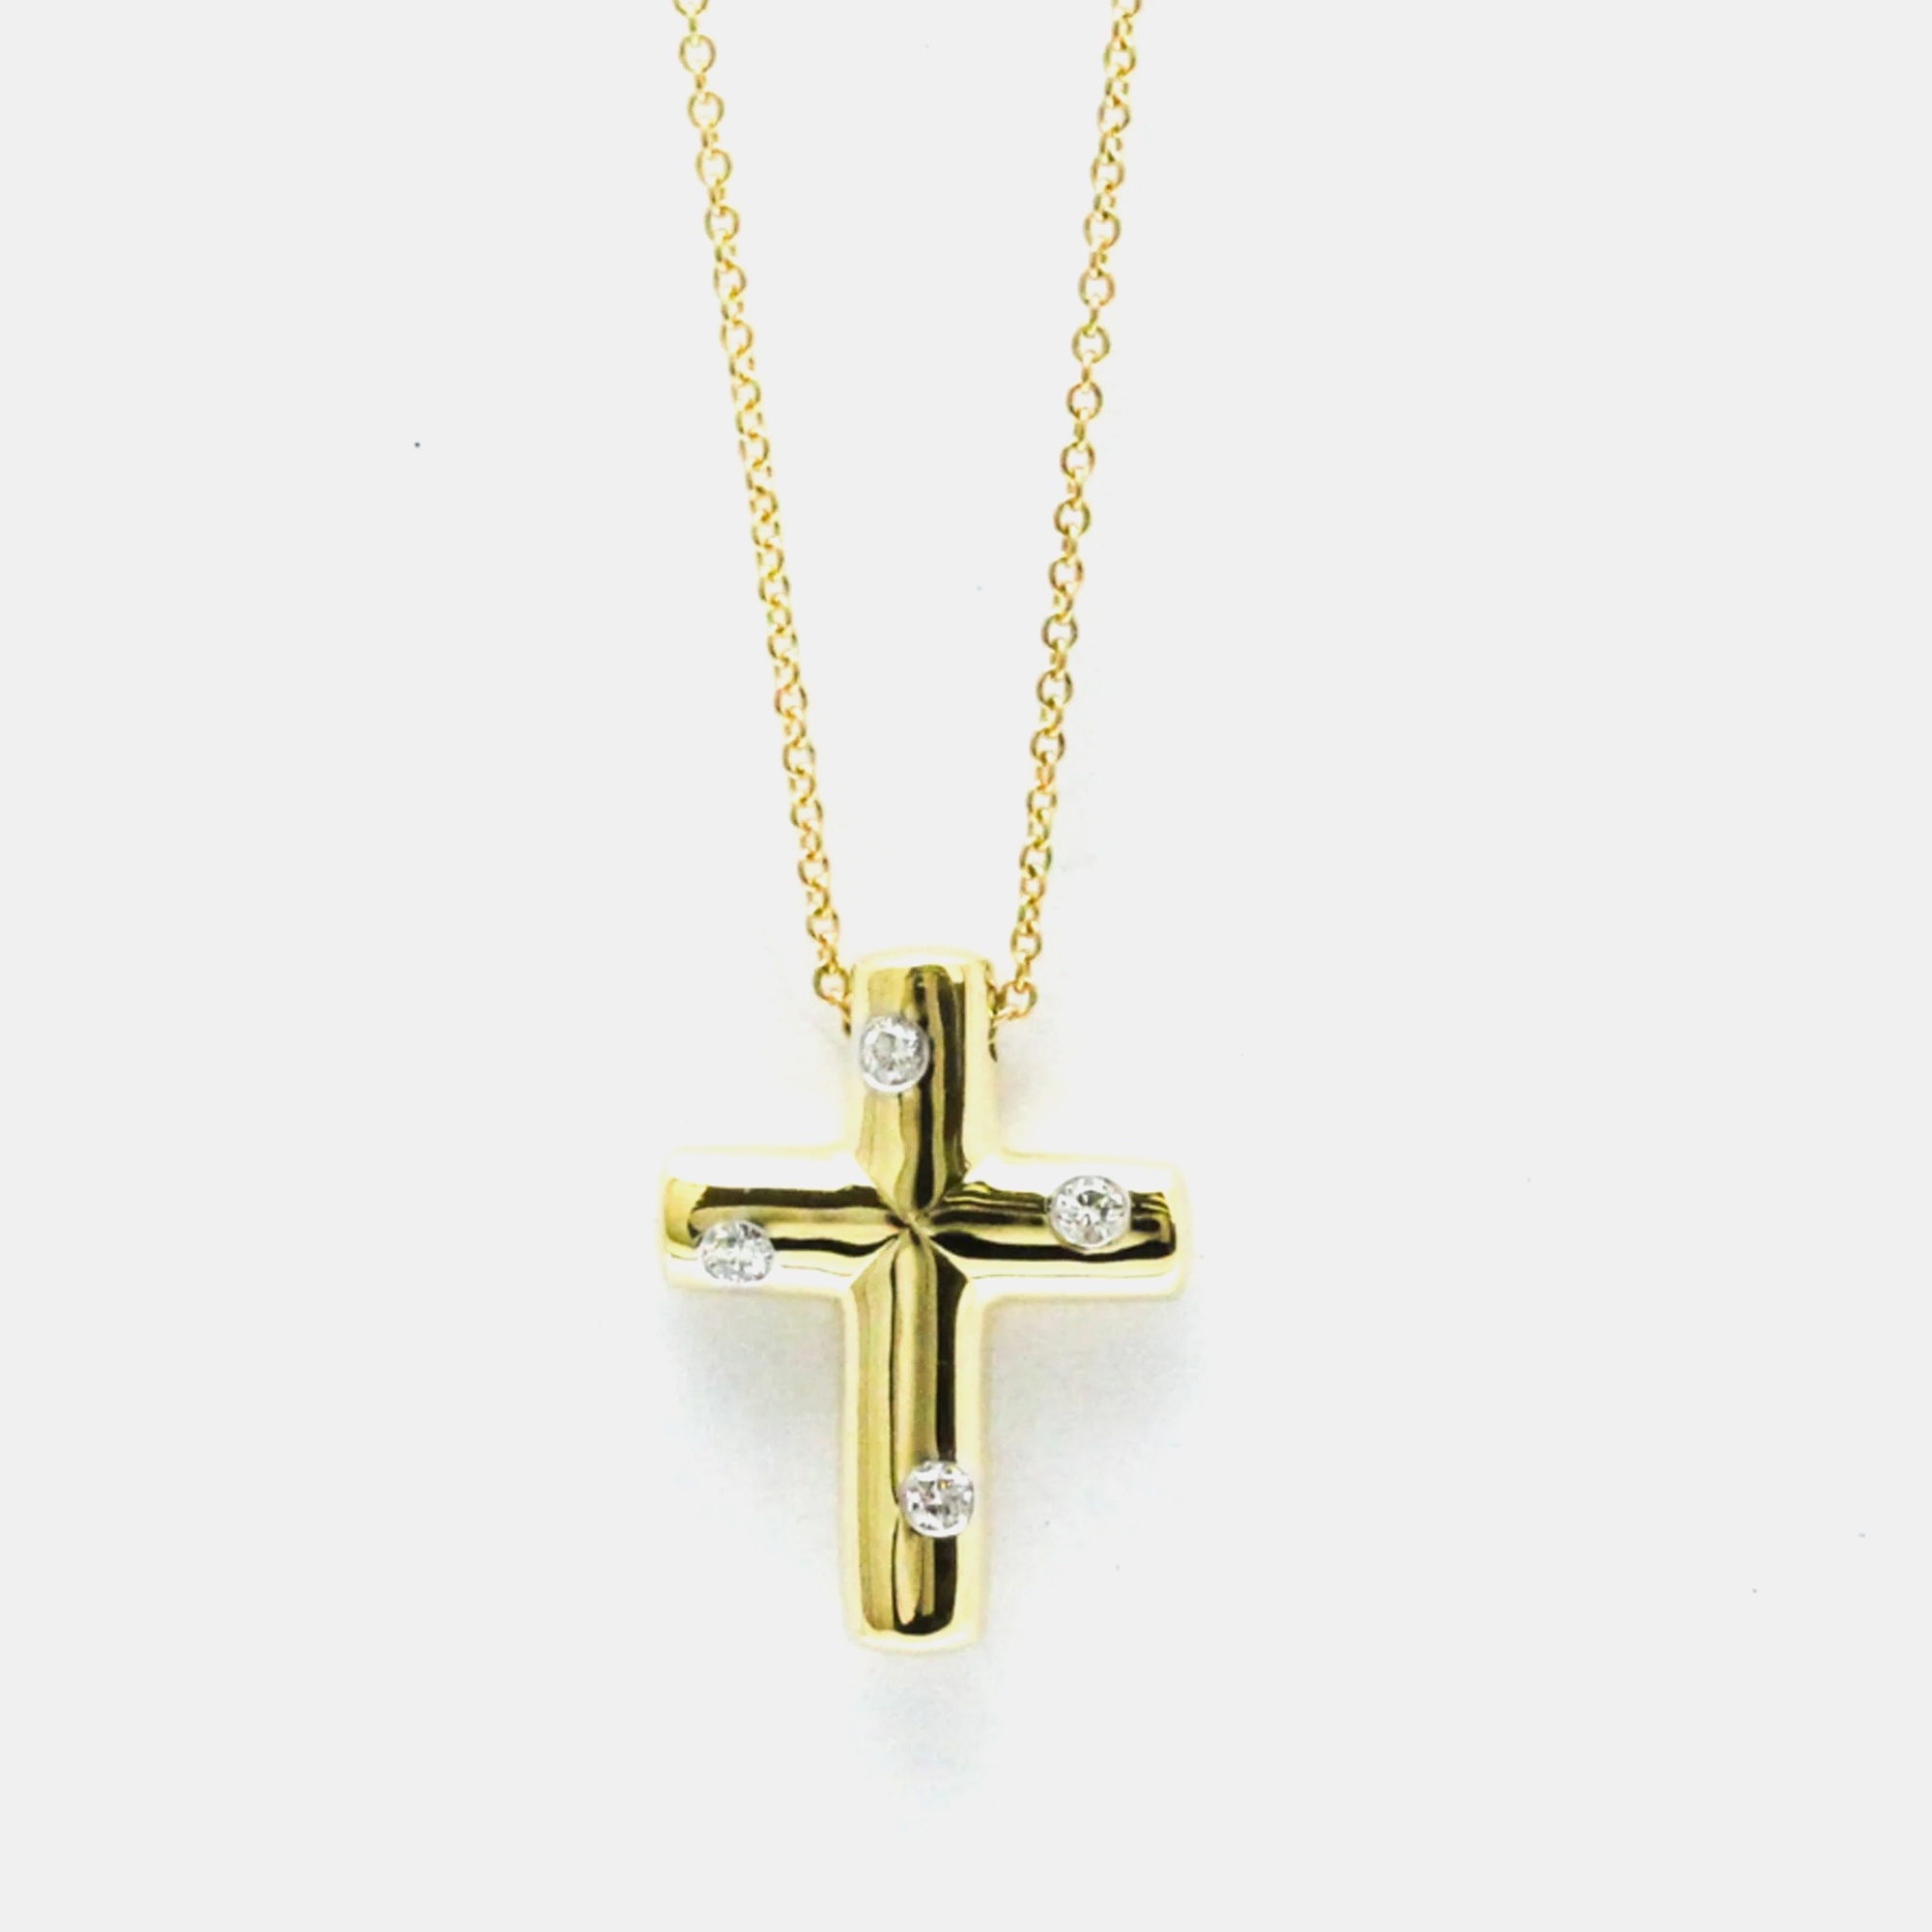 Tiffany & co. 18k yellow gold and diamond etoile cross pendant necklace